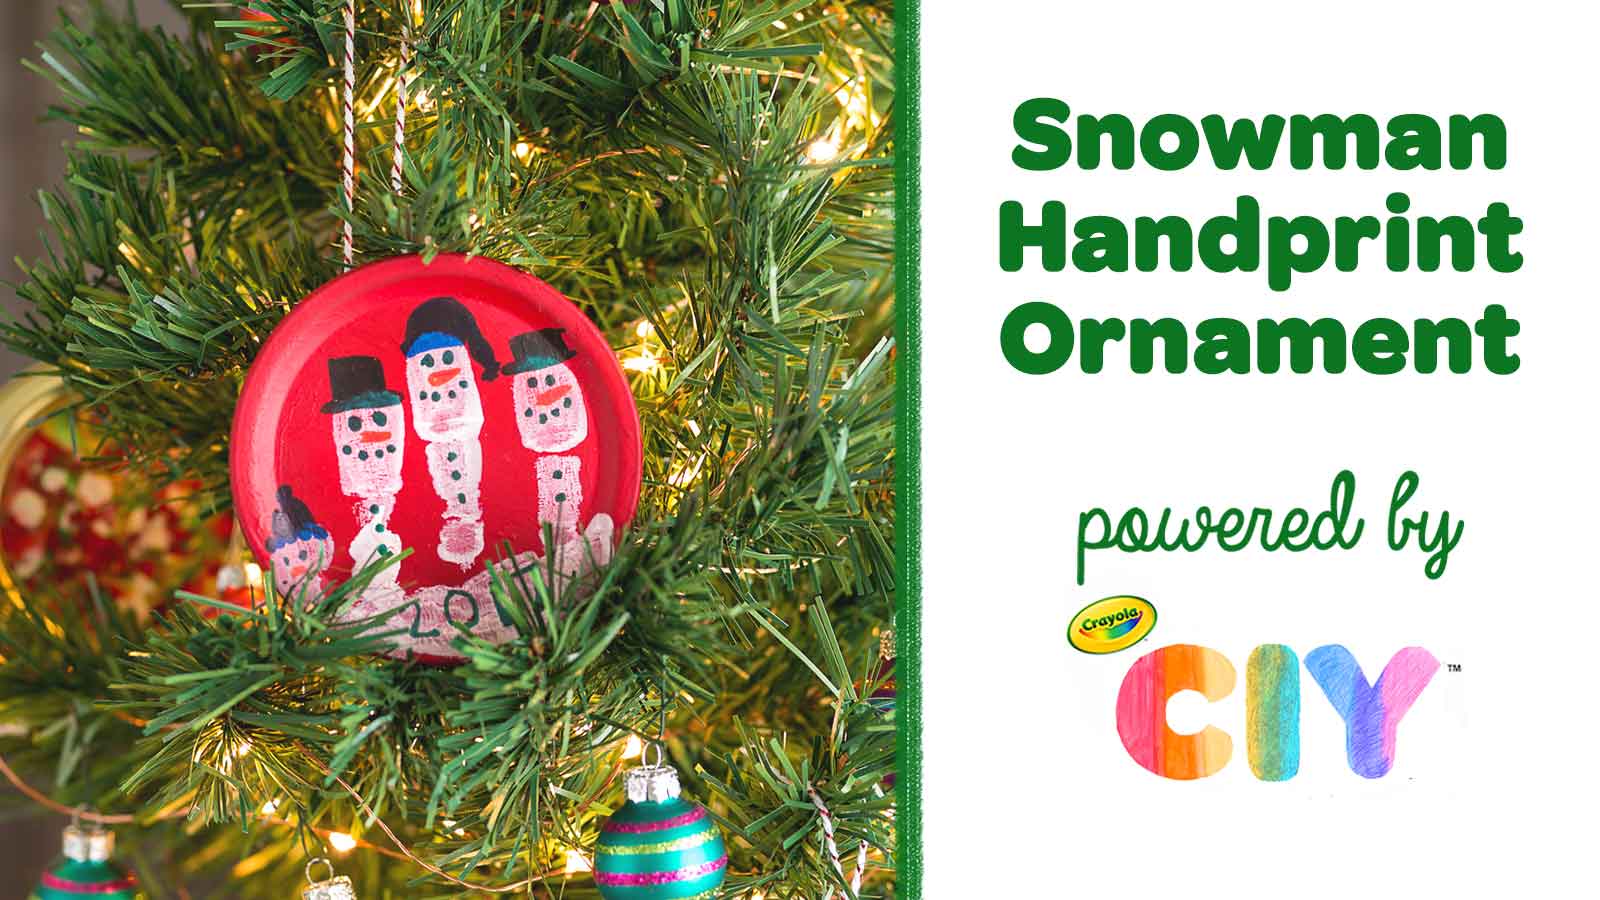 Snowman Handprint Ornament CIY Video Poster Frame